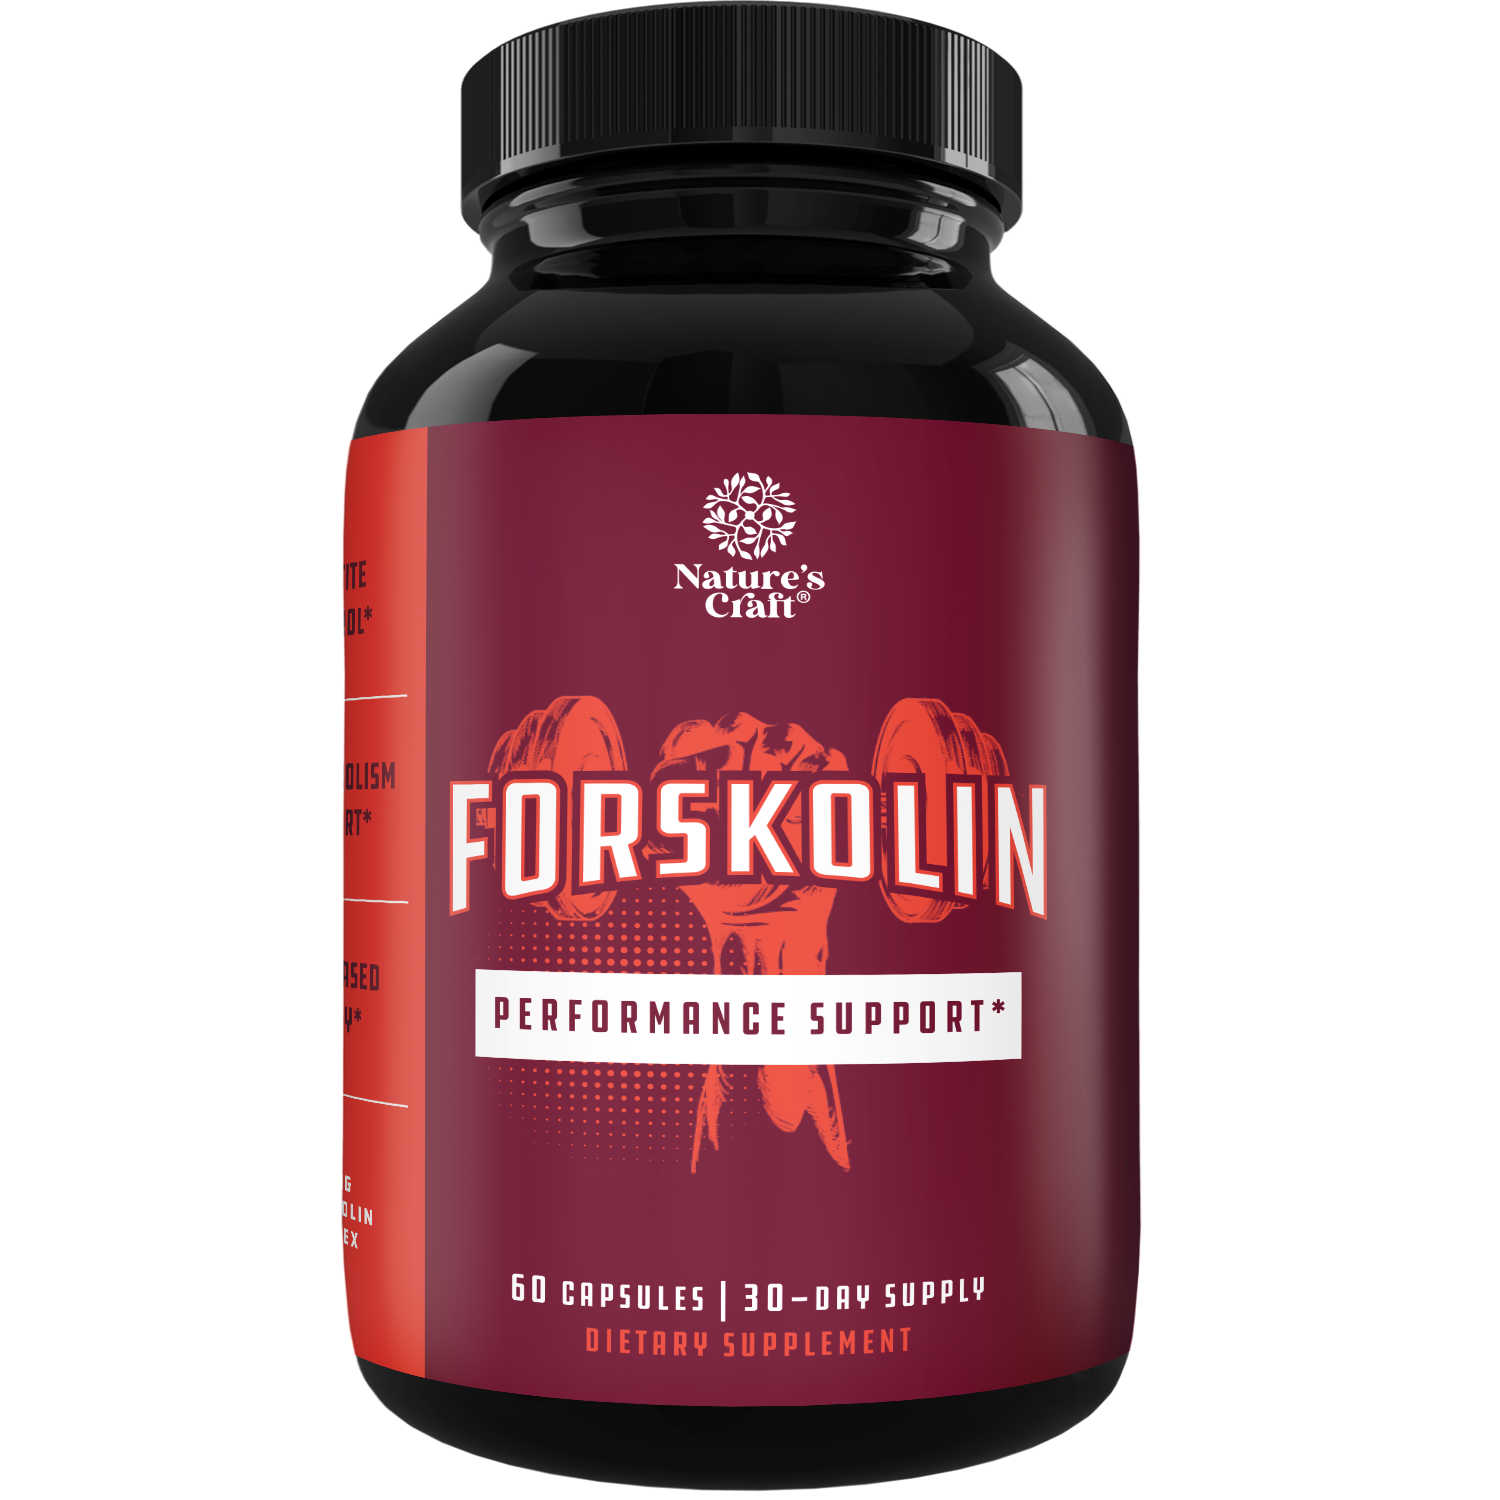 Forskolin and digestive health